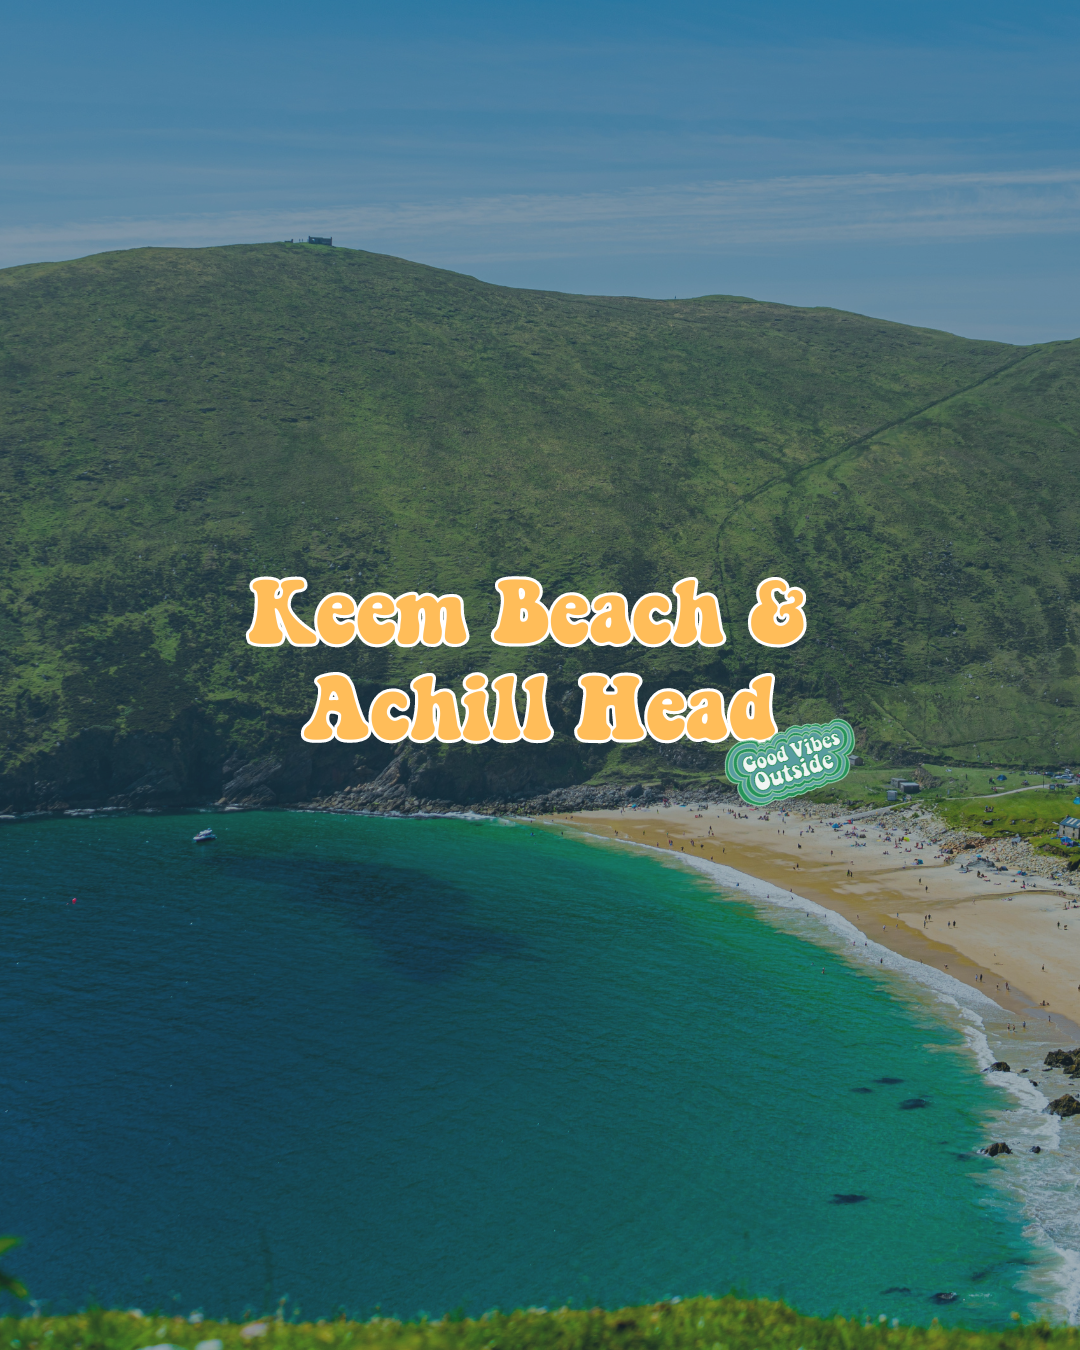 Guide 2: Keem Beach, Achill, Co. Mayo